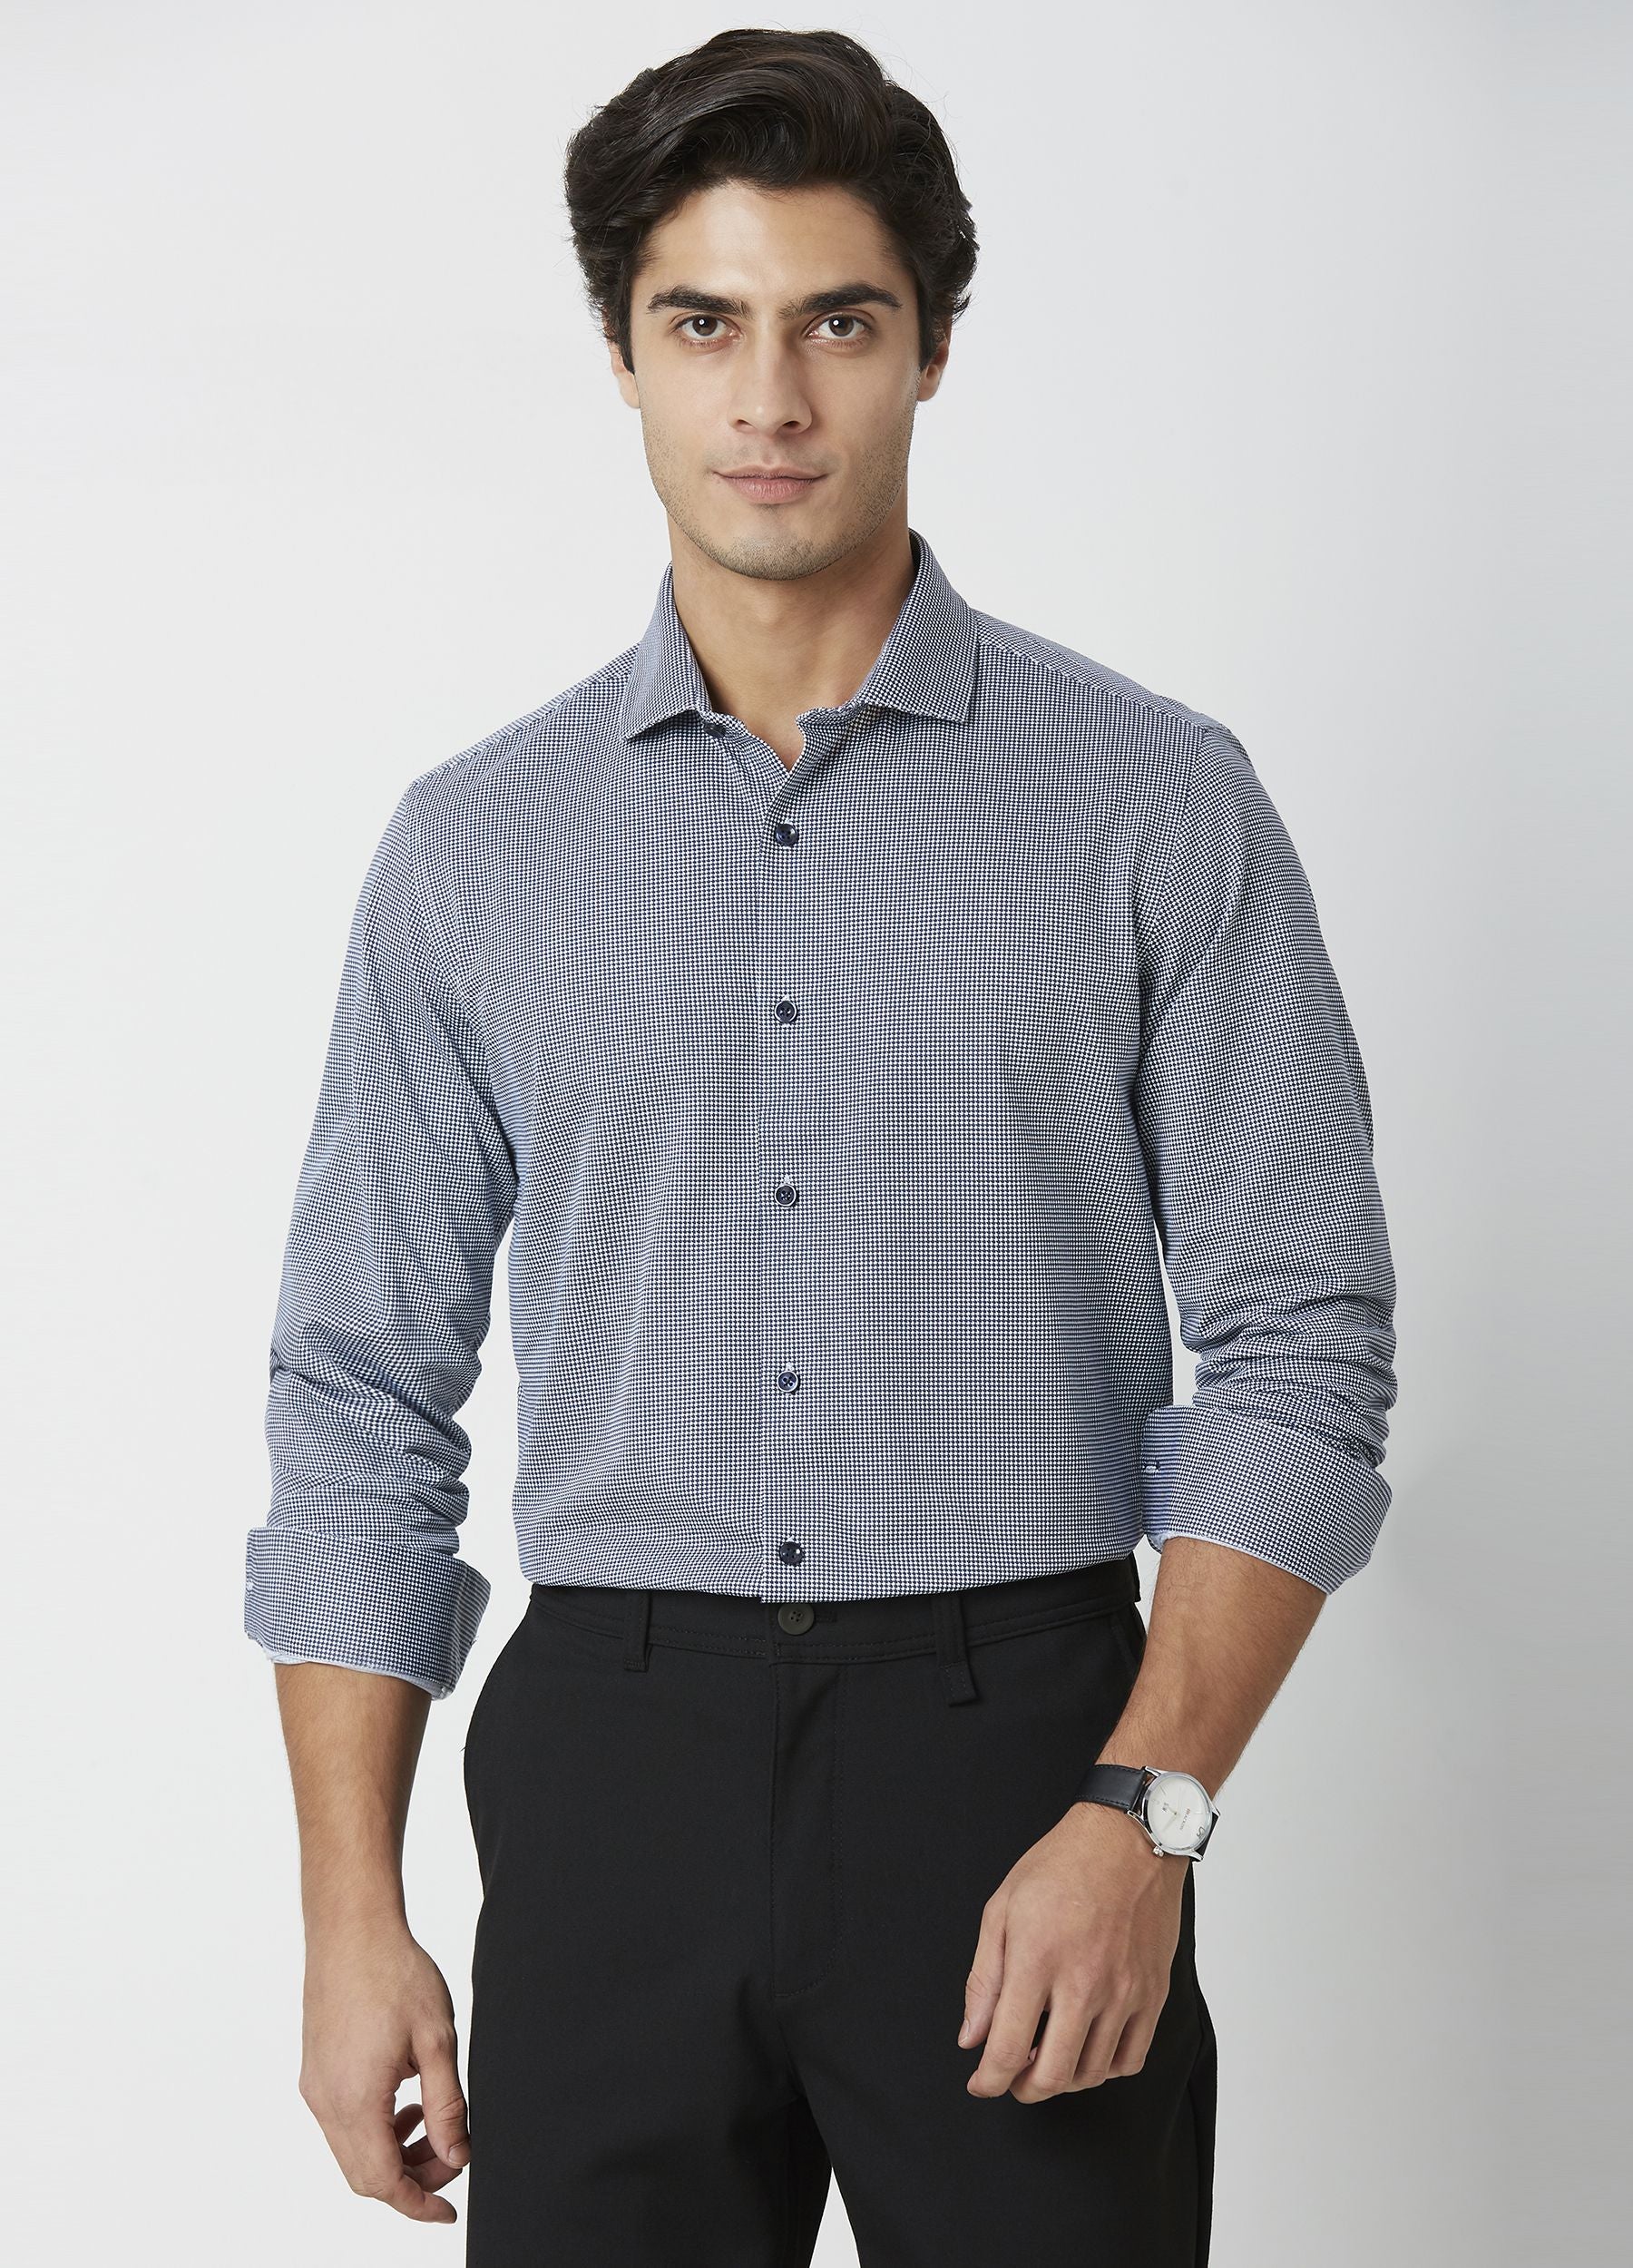 Velos Nev: Cutaway Collar Arrow Print Knit Shirt